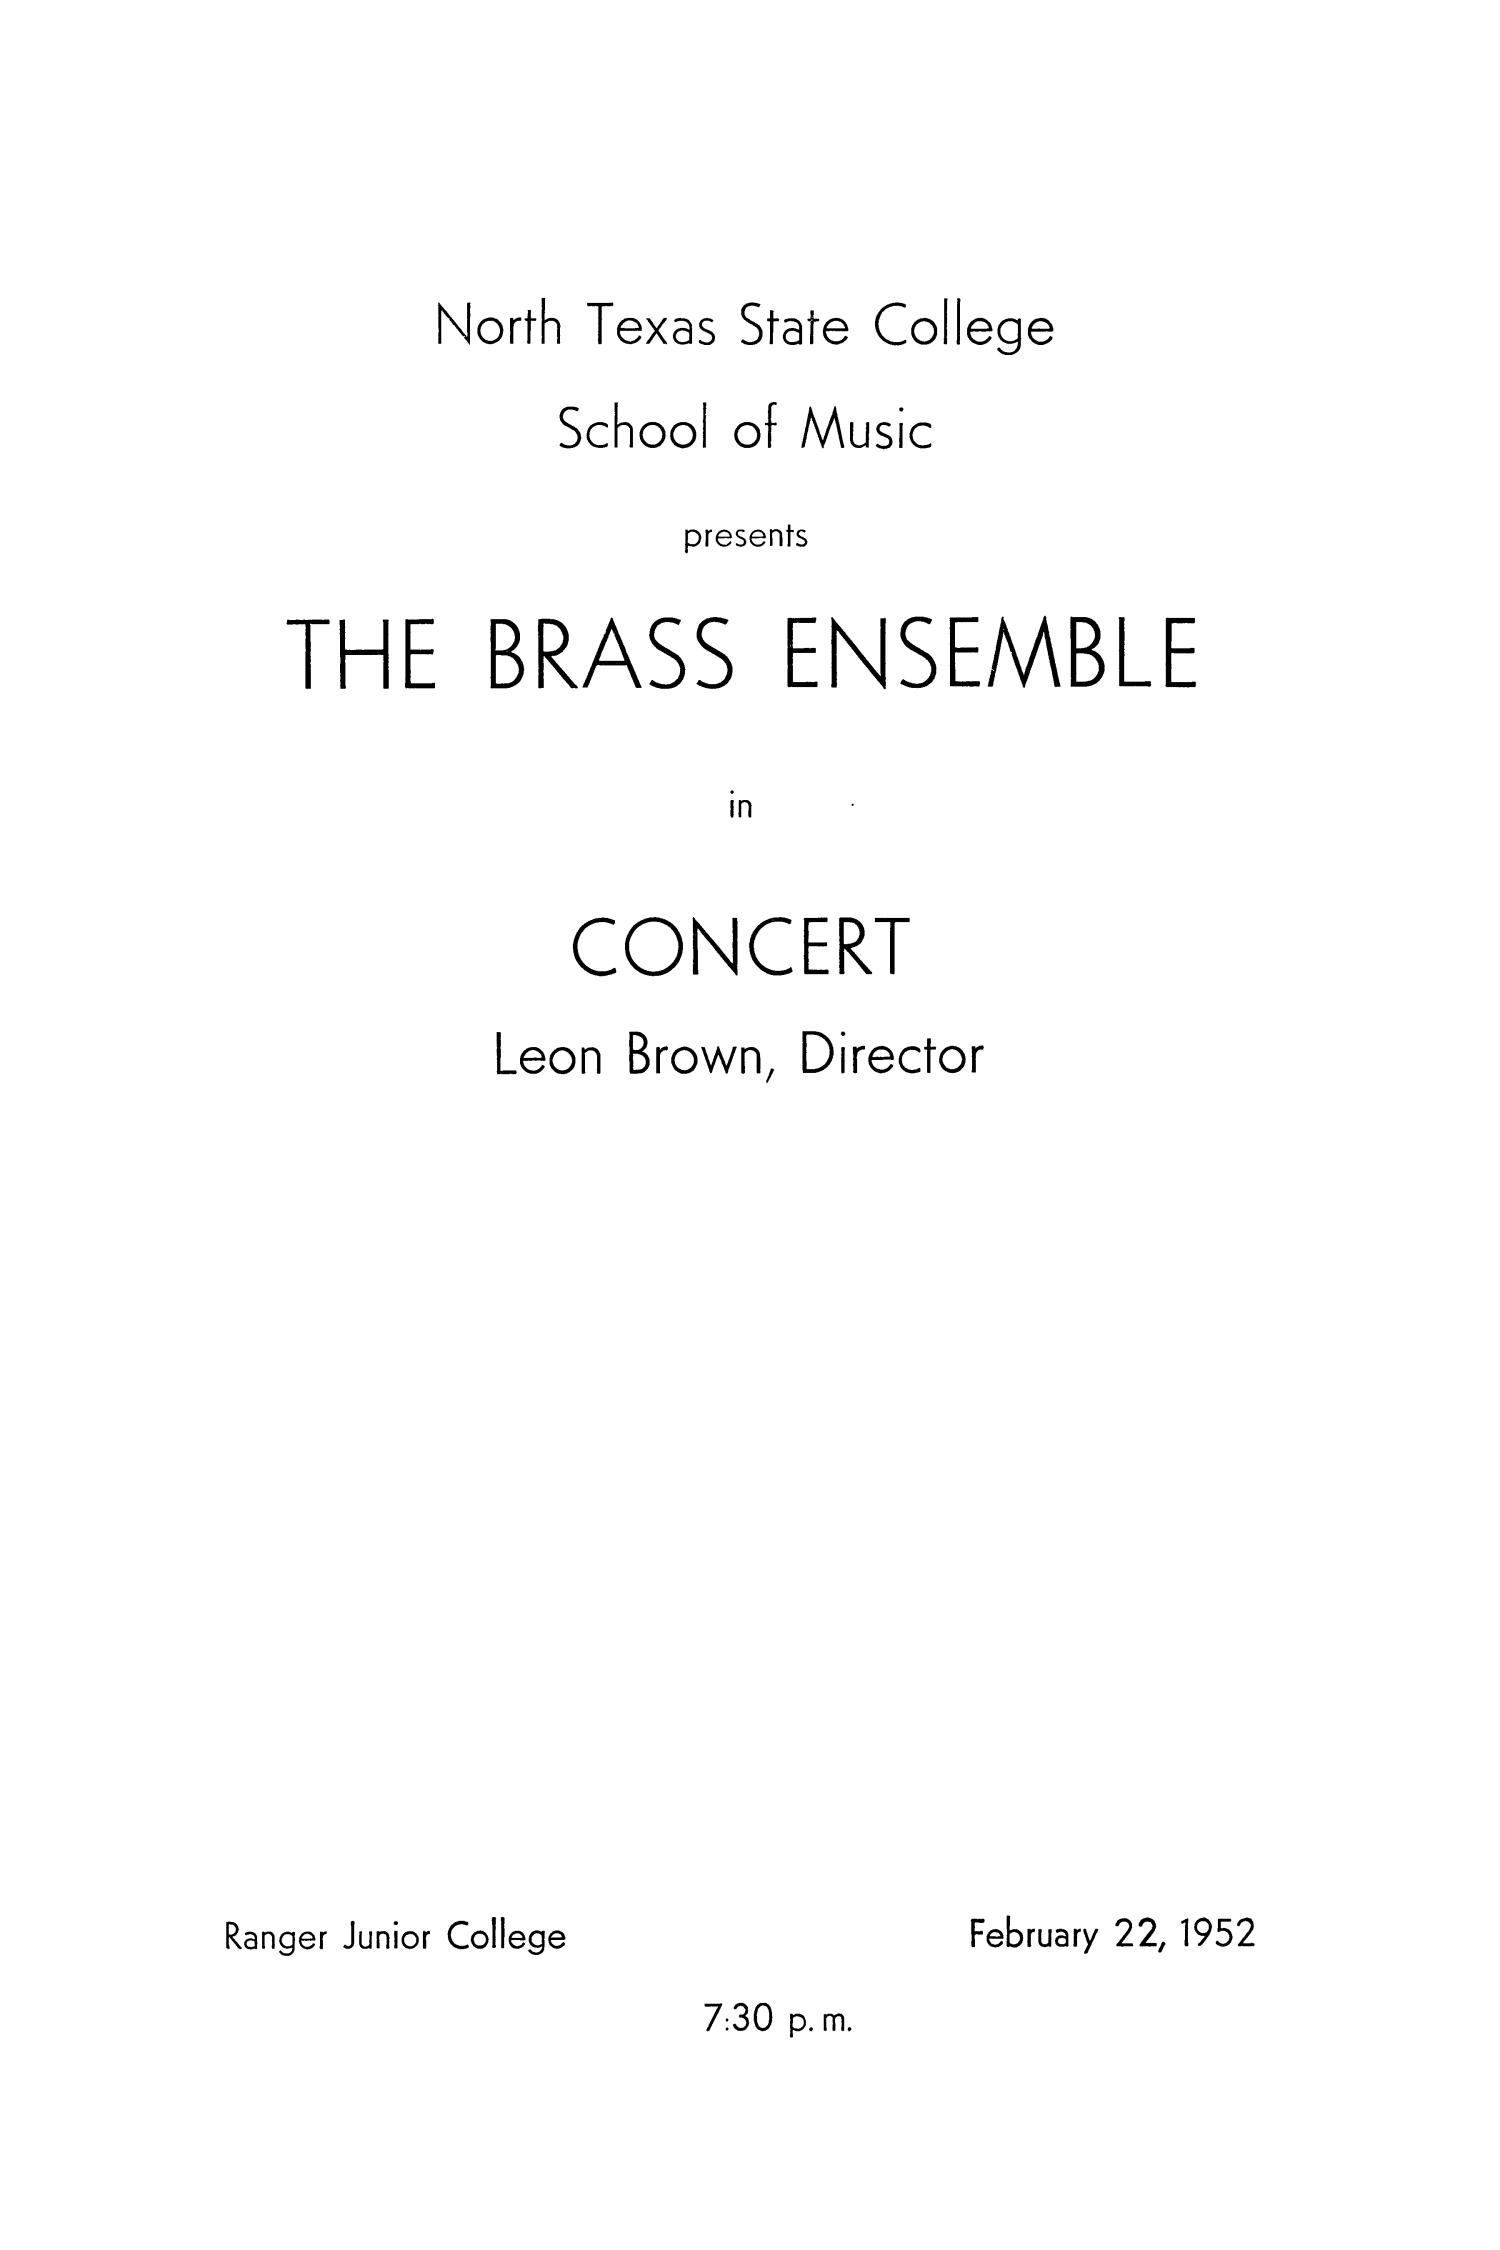 School of Music Program Book 1951-1952
                                                
                                                    89
                                                